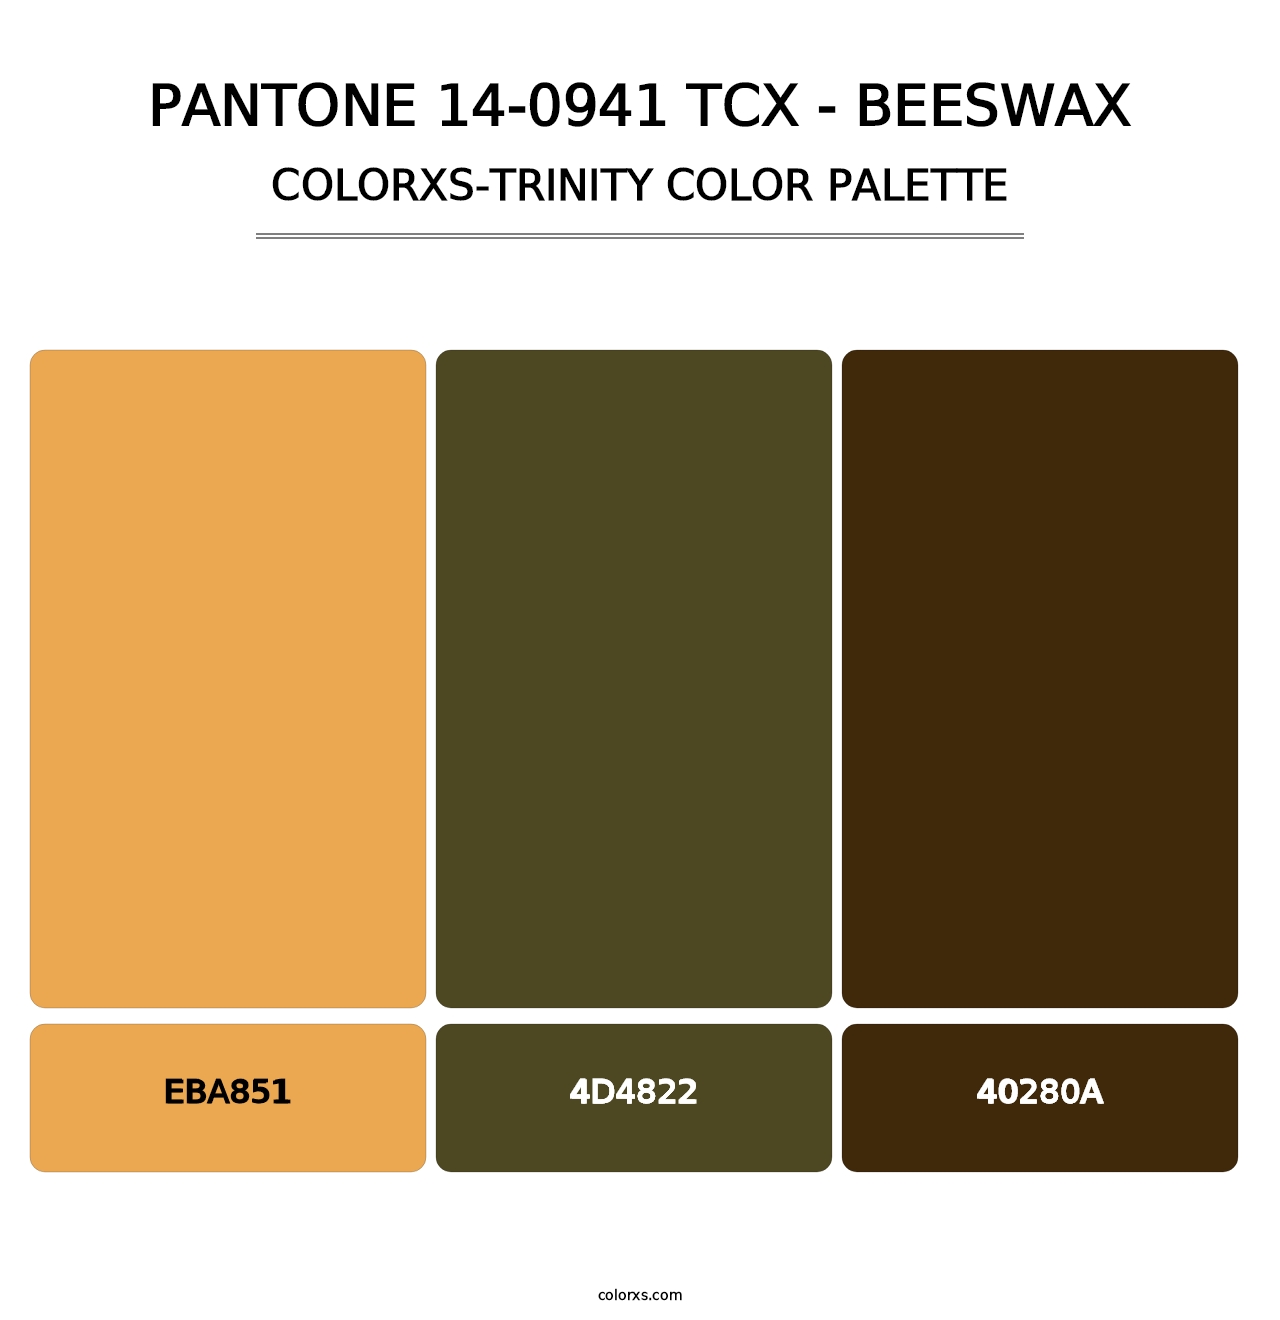 PANTONE 14-0941 TCX - Beeswax - Colorxs Trinity Palette